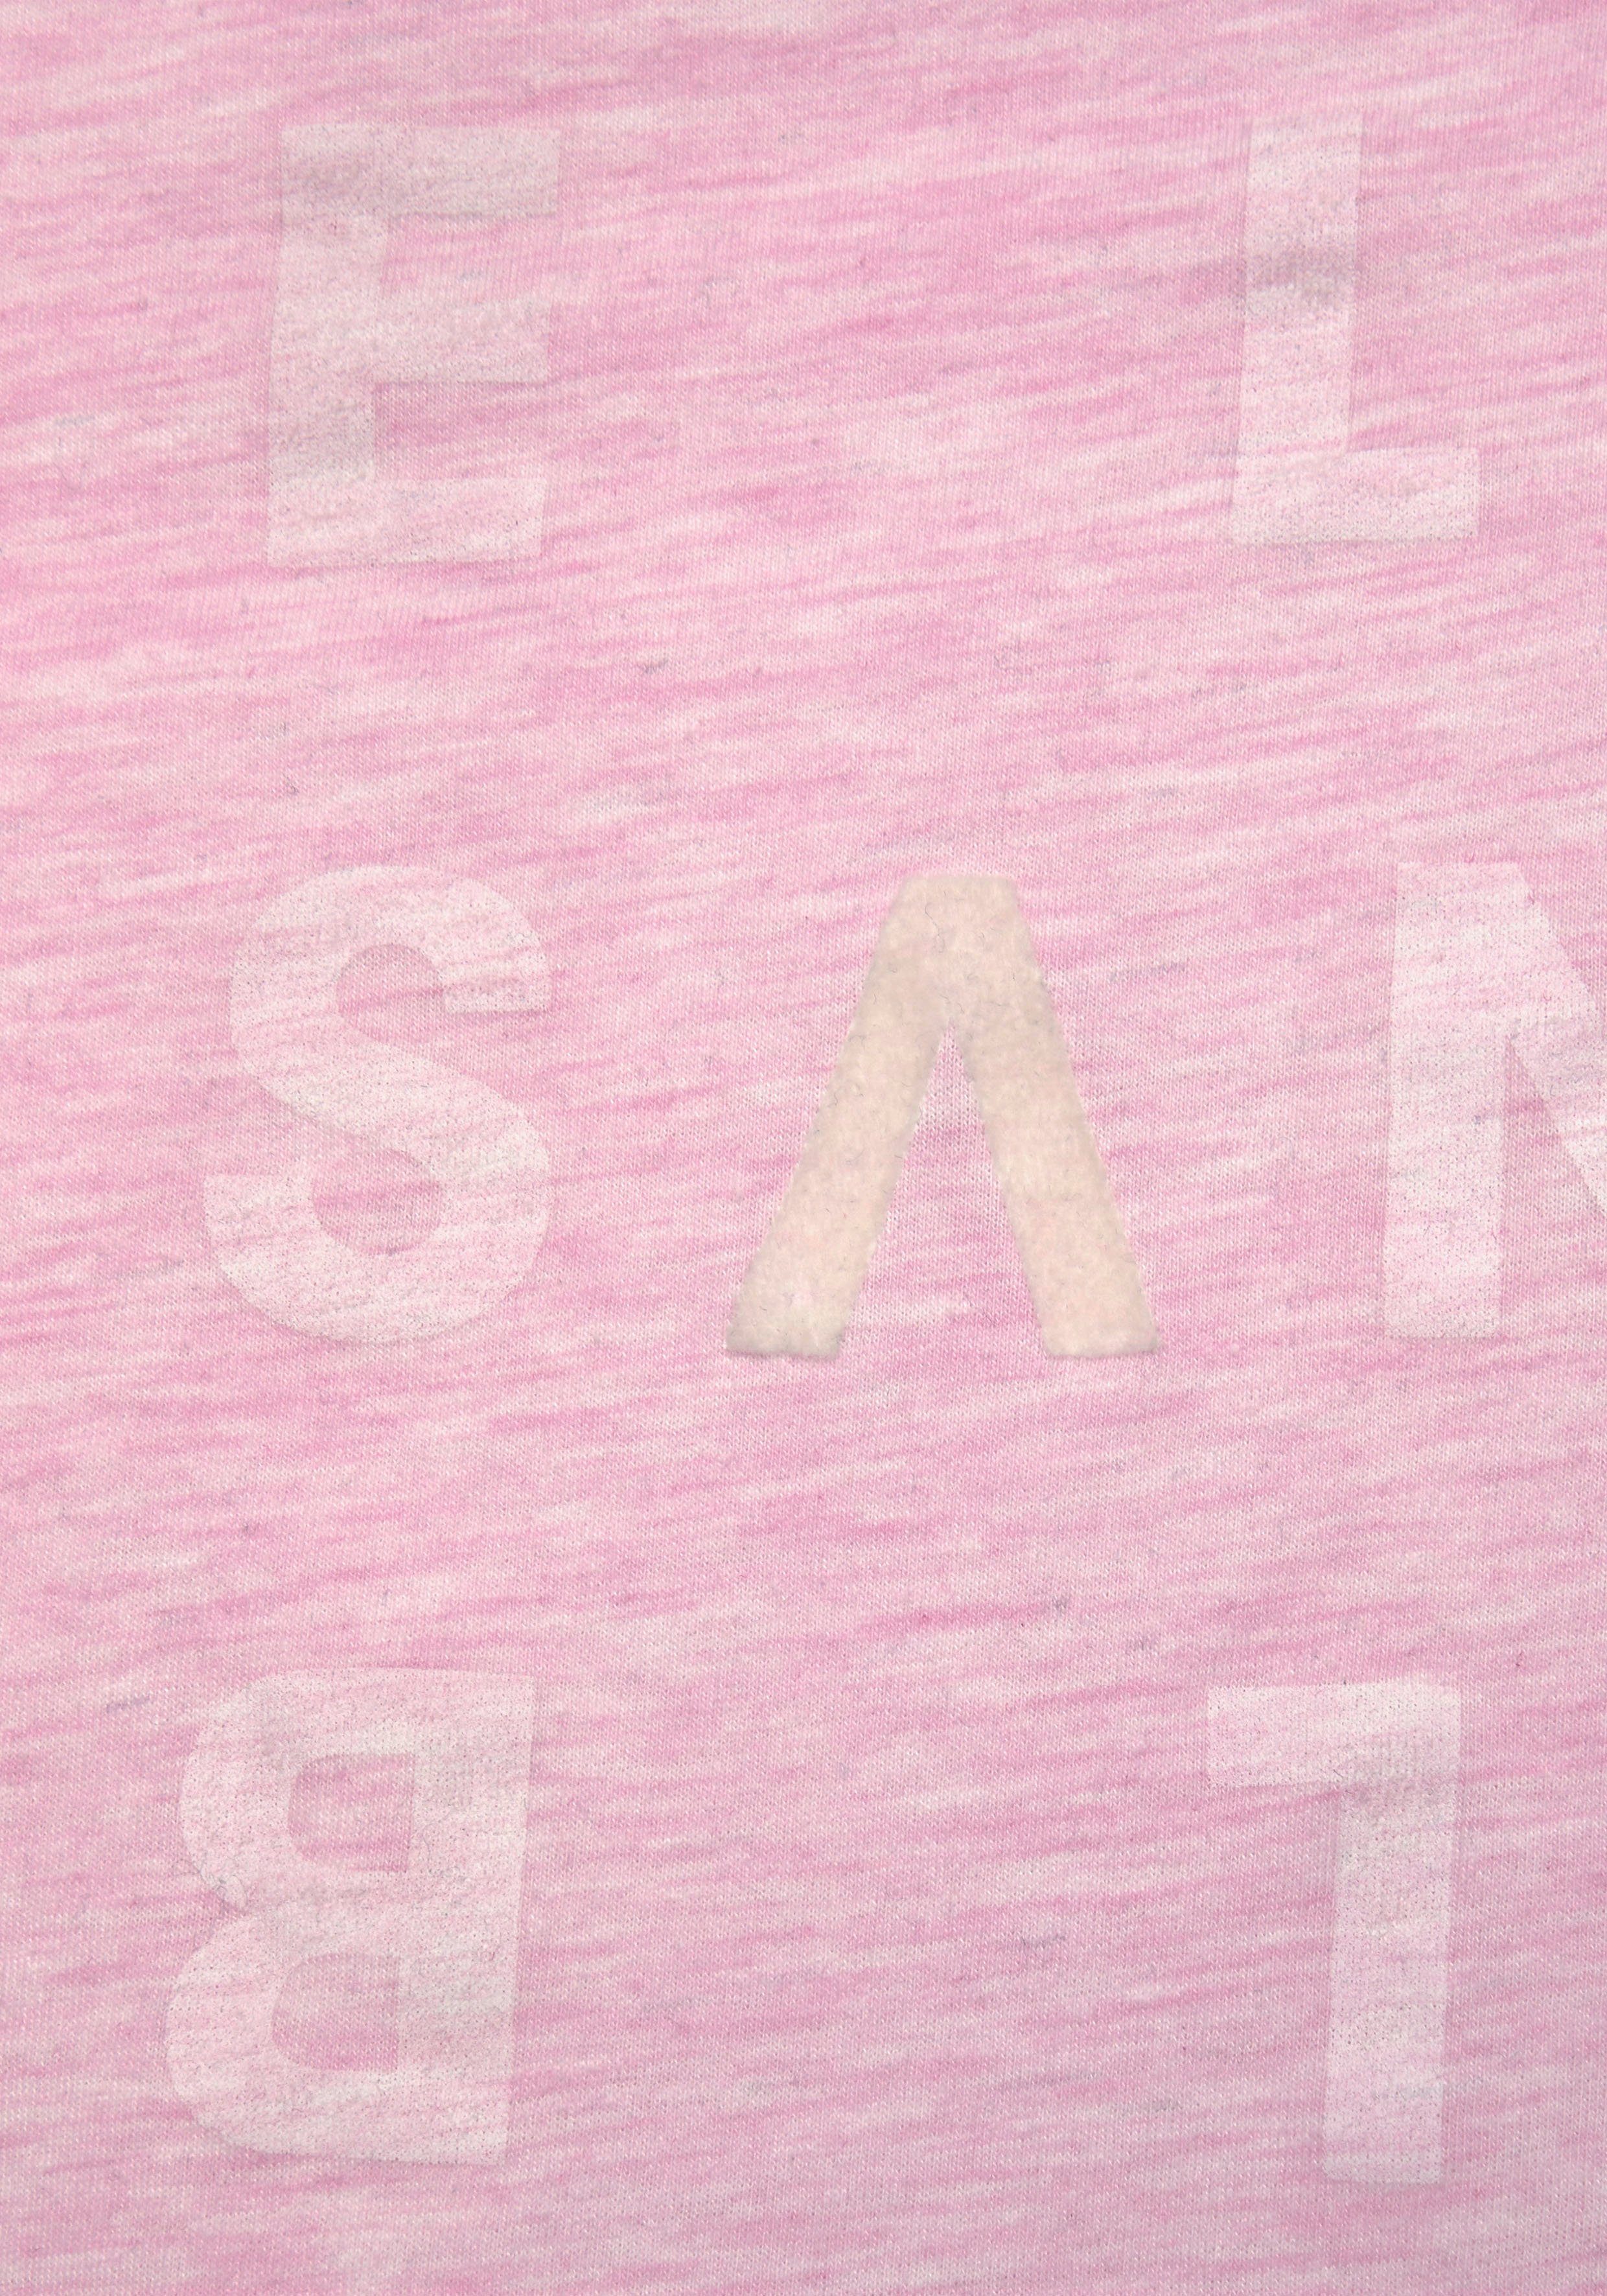 mit Ingrun vorne, Langarmshirt Elbsand pink-meliert Longsleeve aus Logodruck Baumwoll-Mix